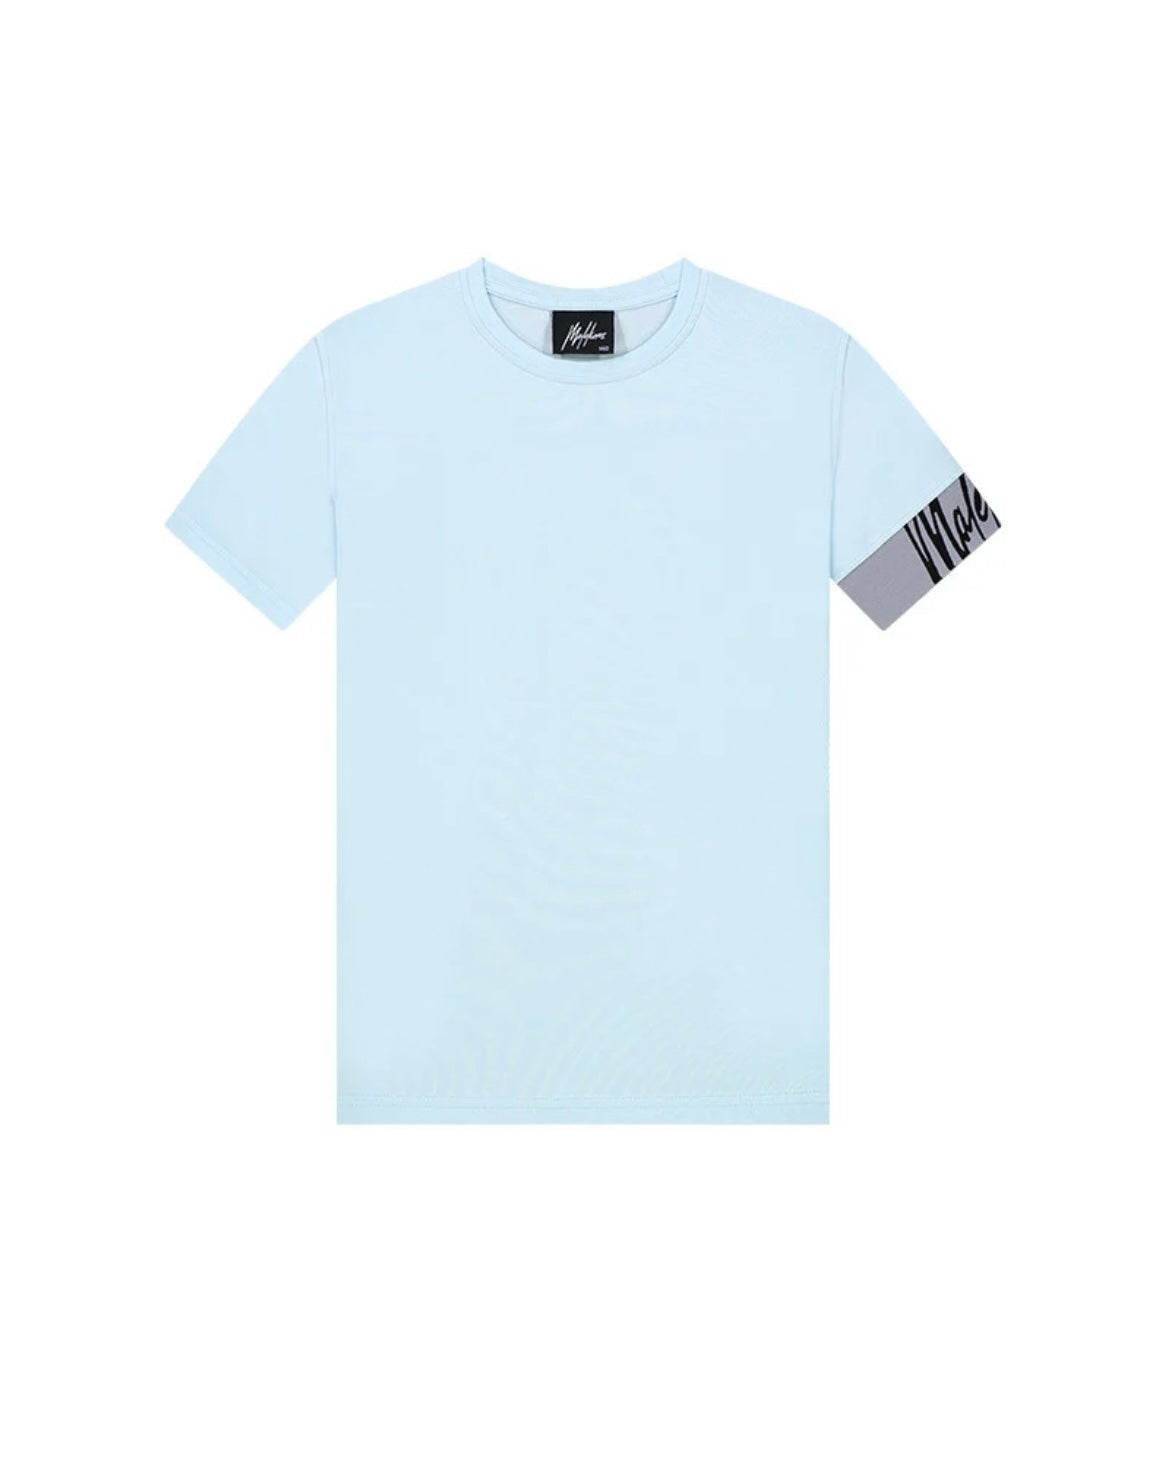 Malelions junior captain t-shirt 2.0 - light blue/black